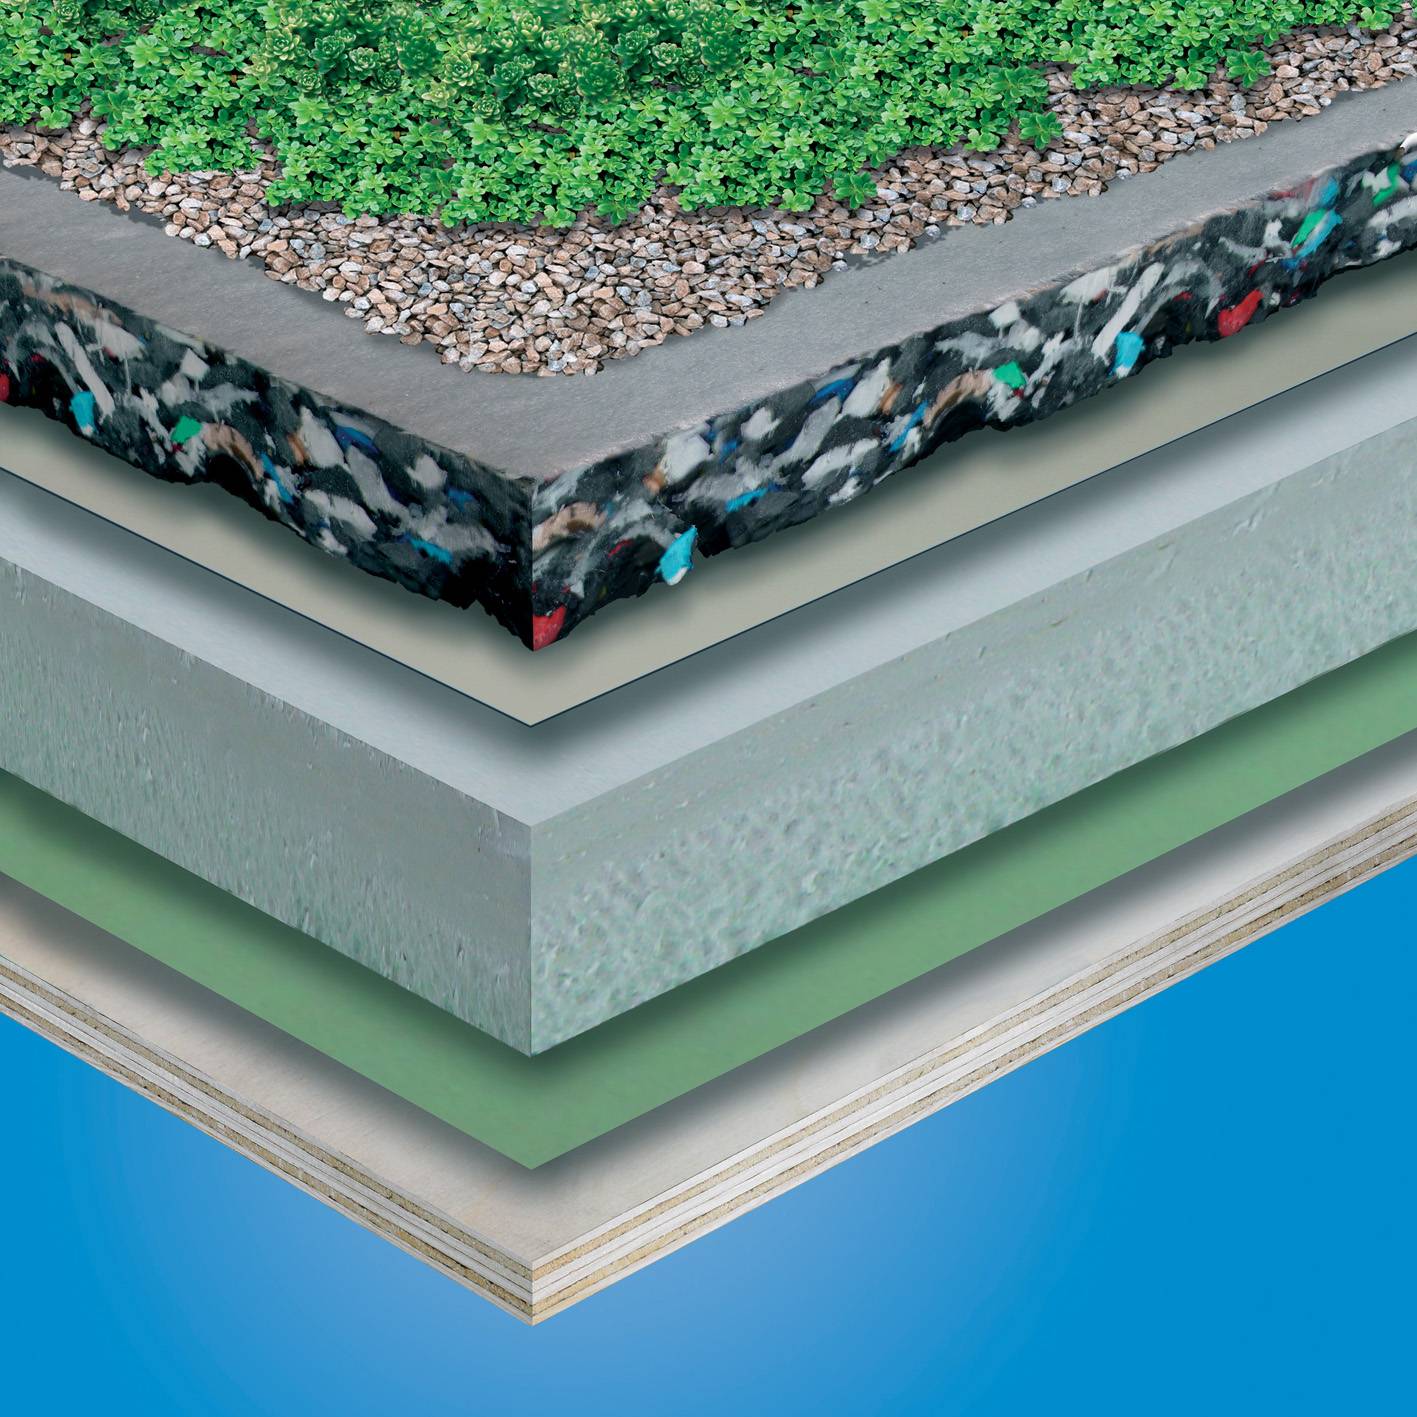 G410-EL Green Roof System - Recycled High Density Polyethylene Drainage Board